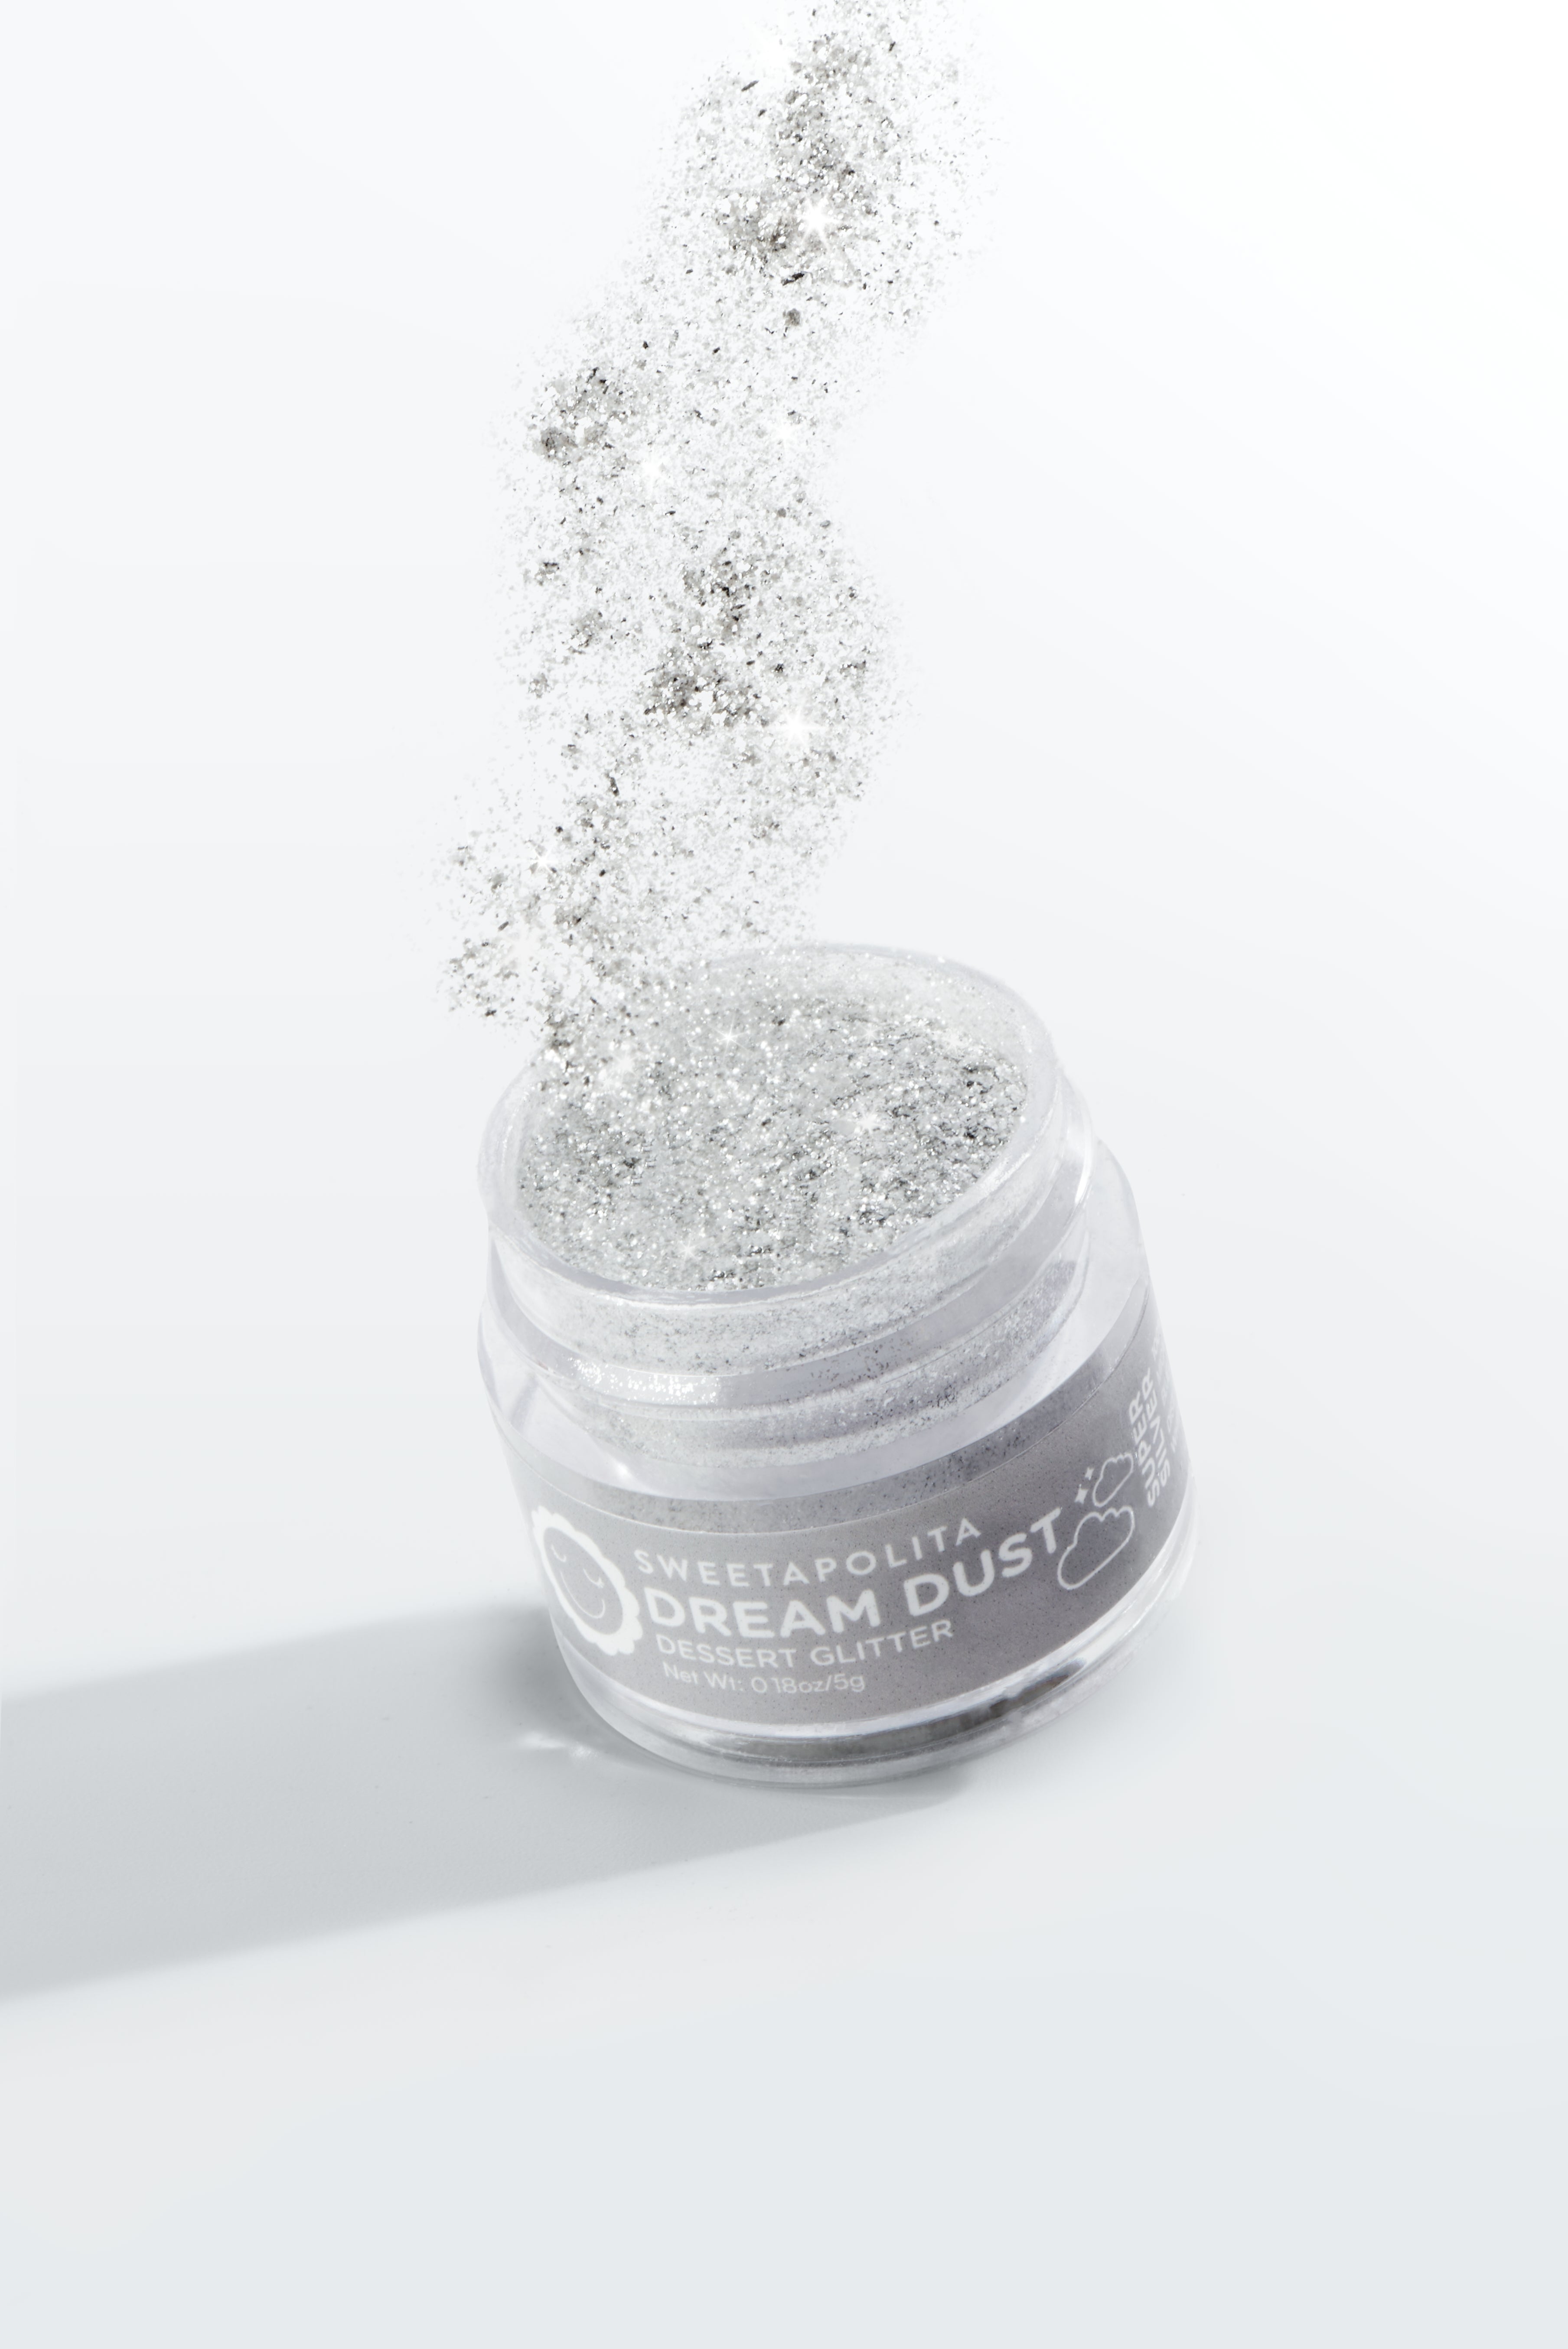 Super Silver  Dream Dust Edible Dessert Glitter - US